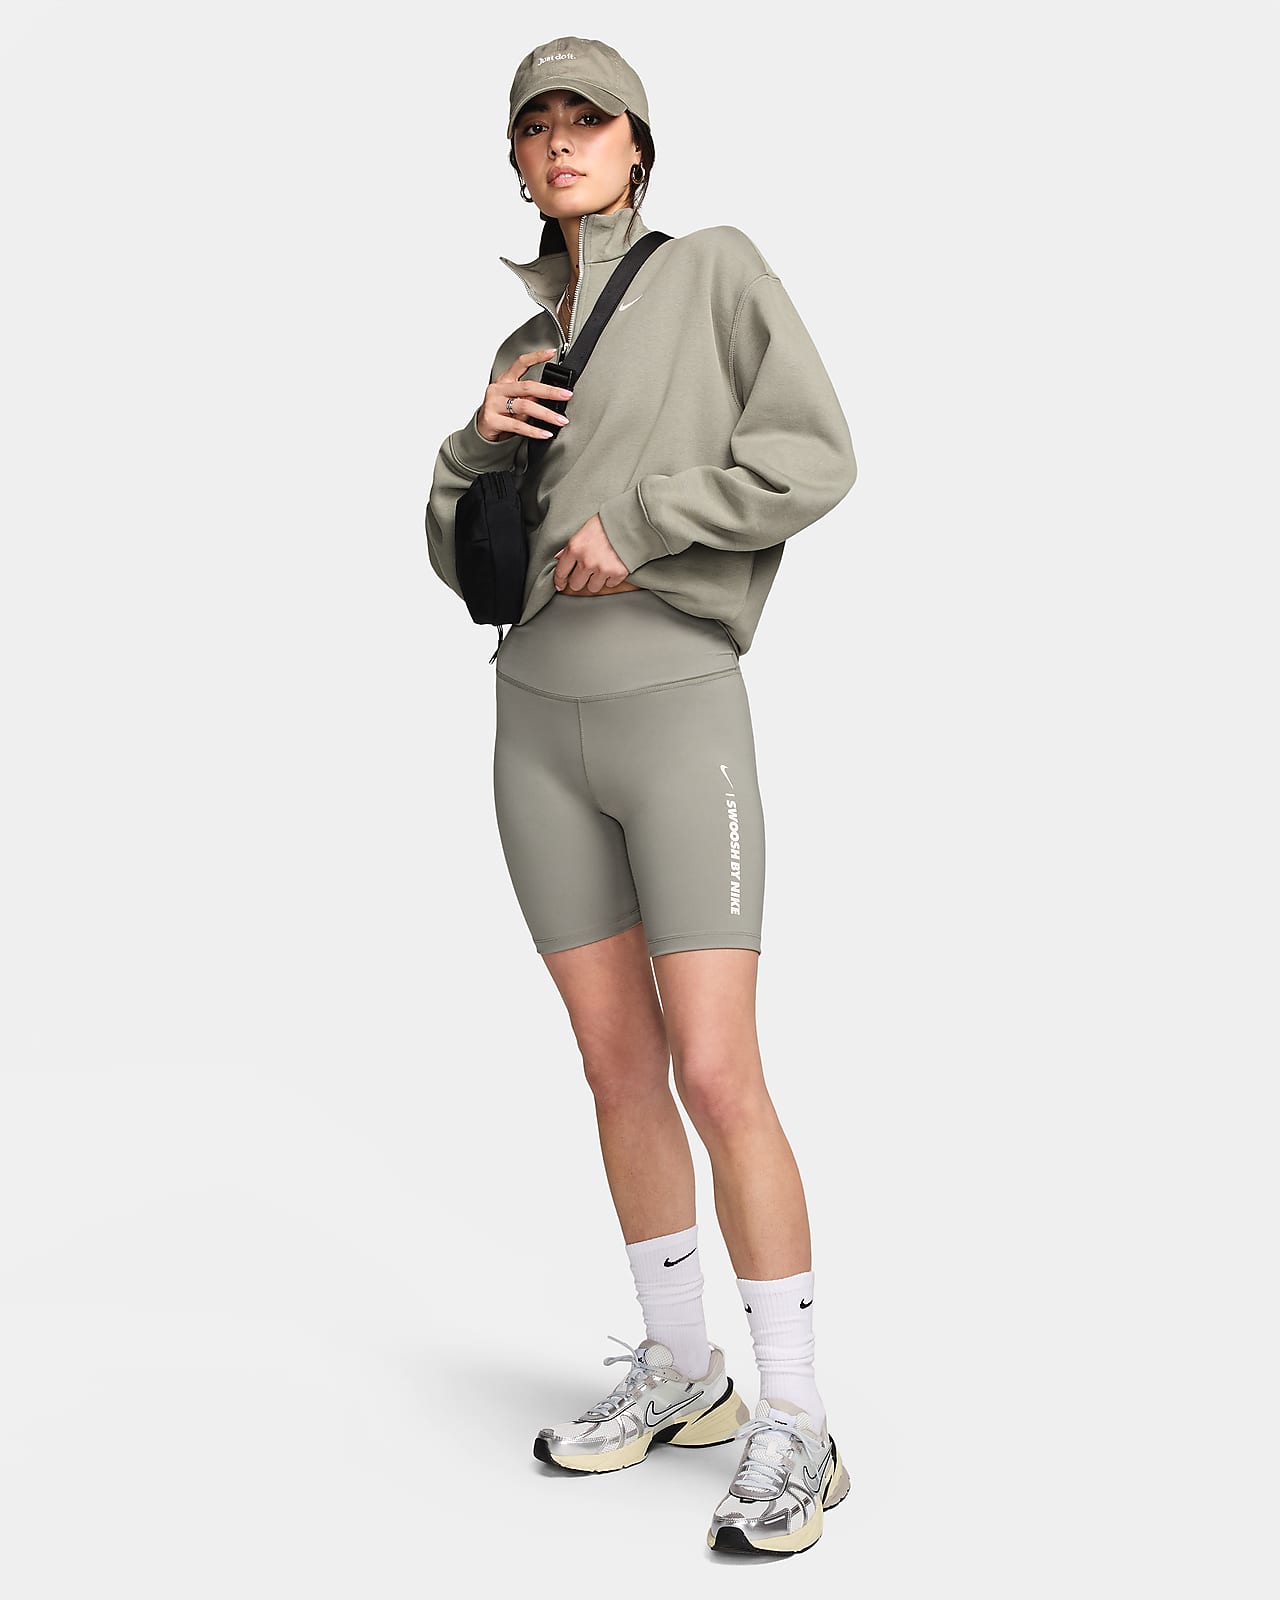 Nike Yoga Women's High-Waisted 18cm (approx.) Shorts. Nike AU